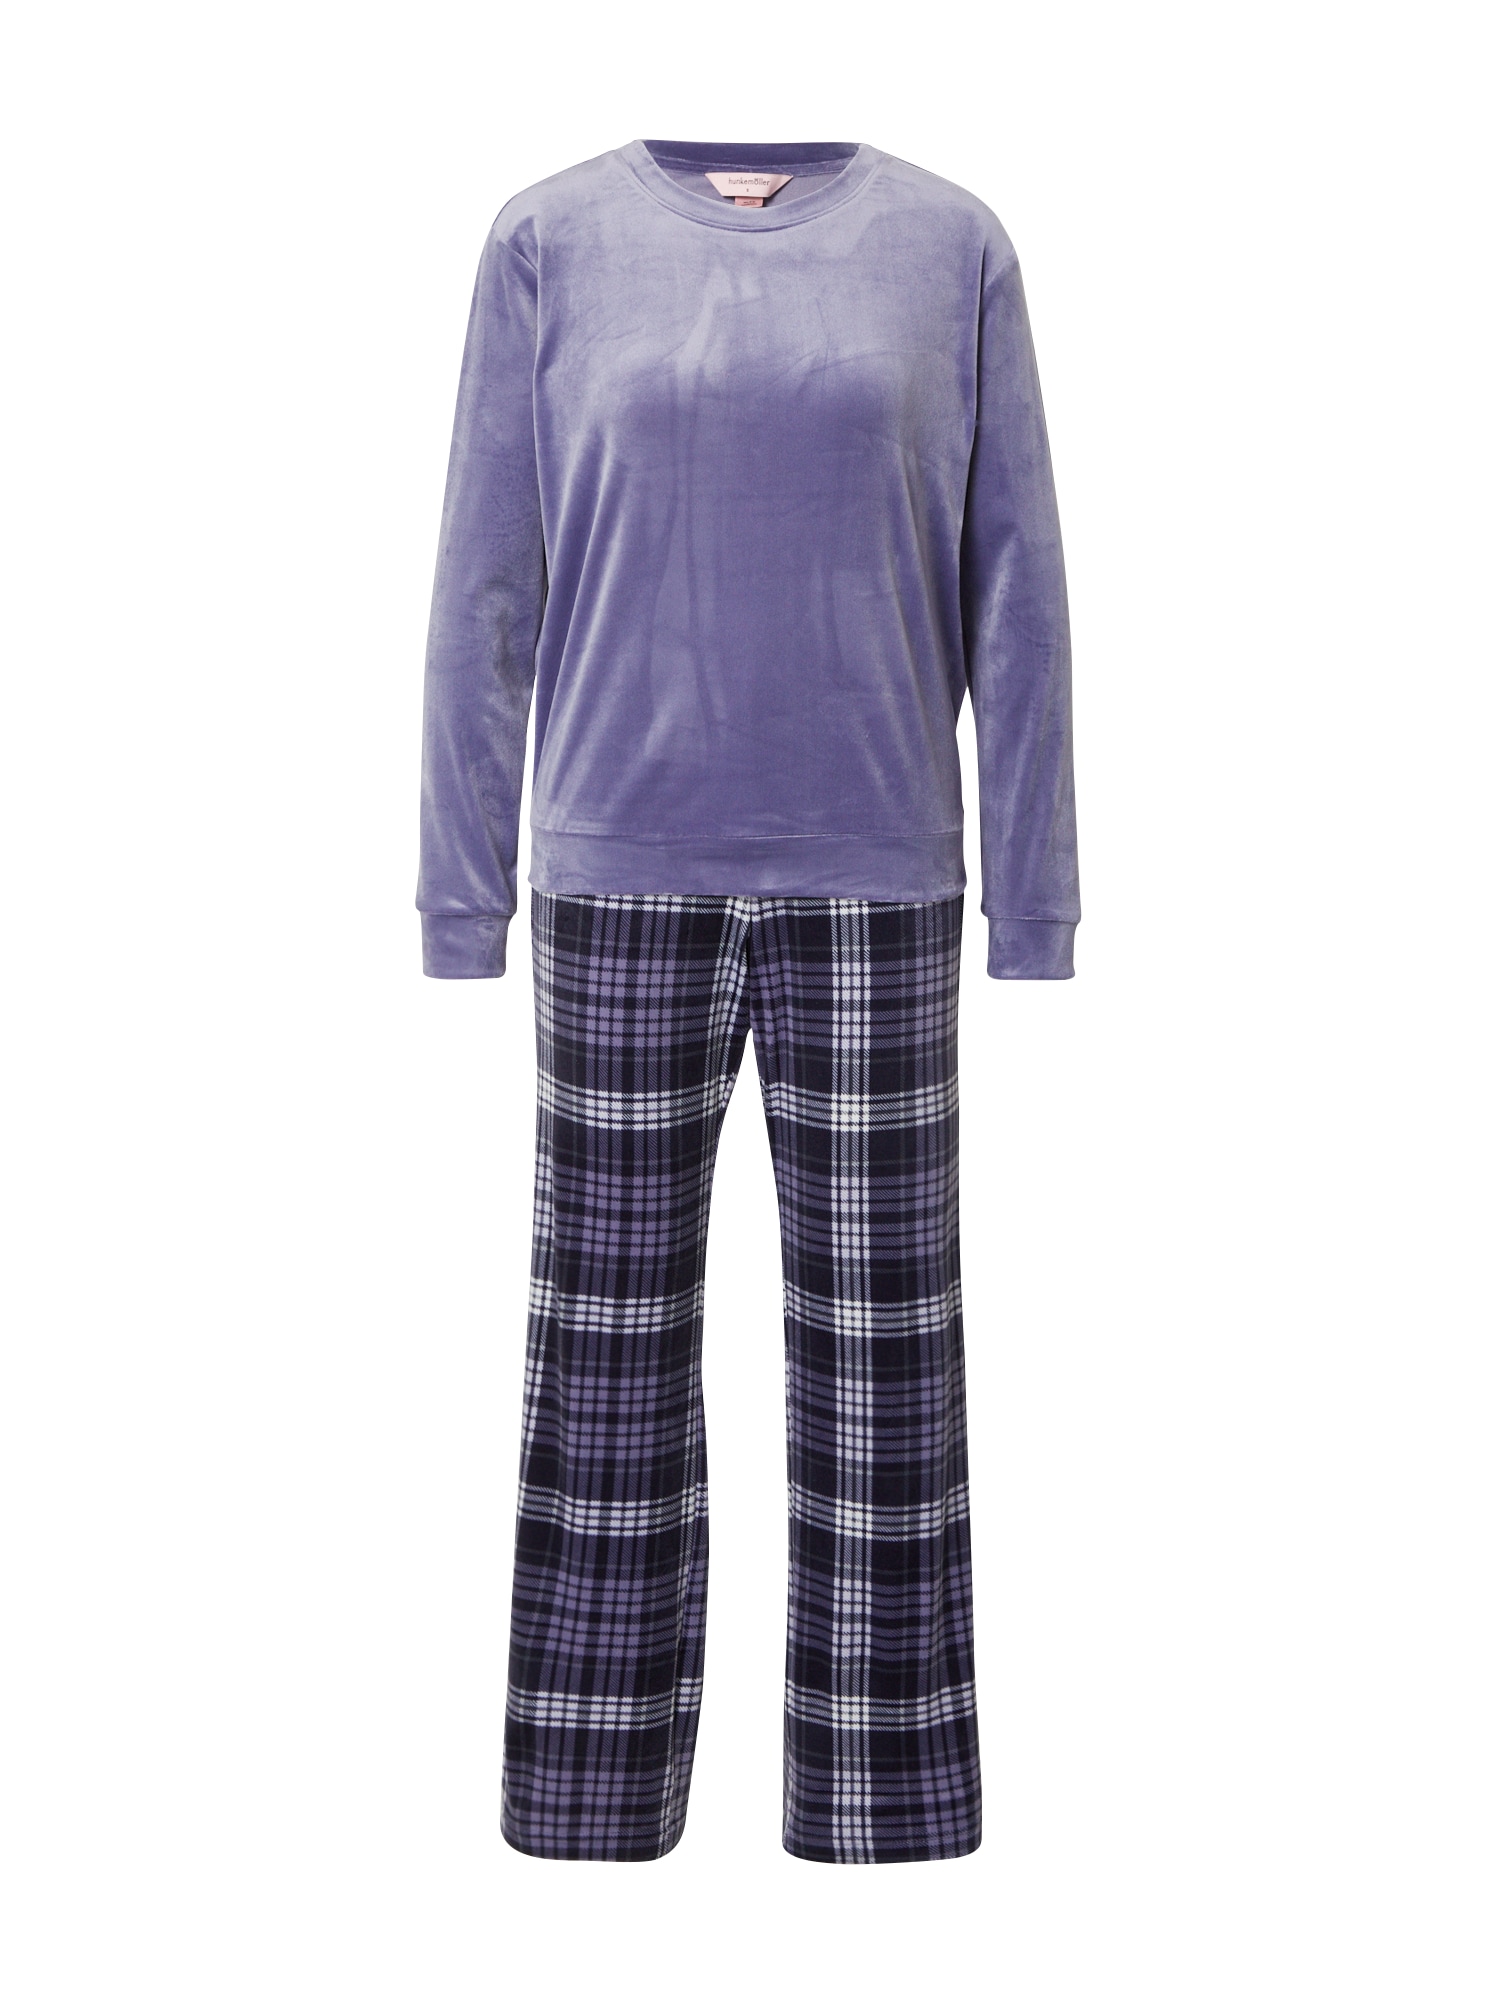 Pyjama von Hunkemöller